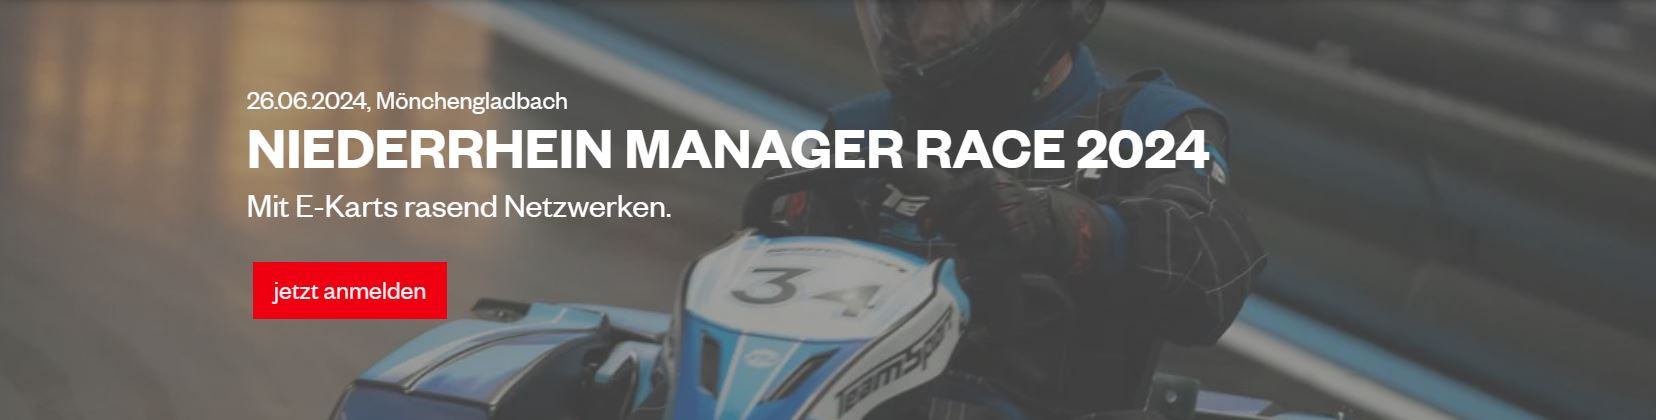 Bild: Manager Race 2024